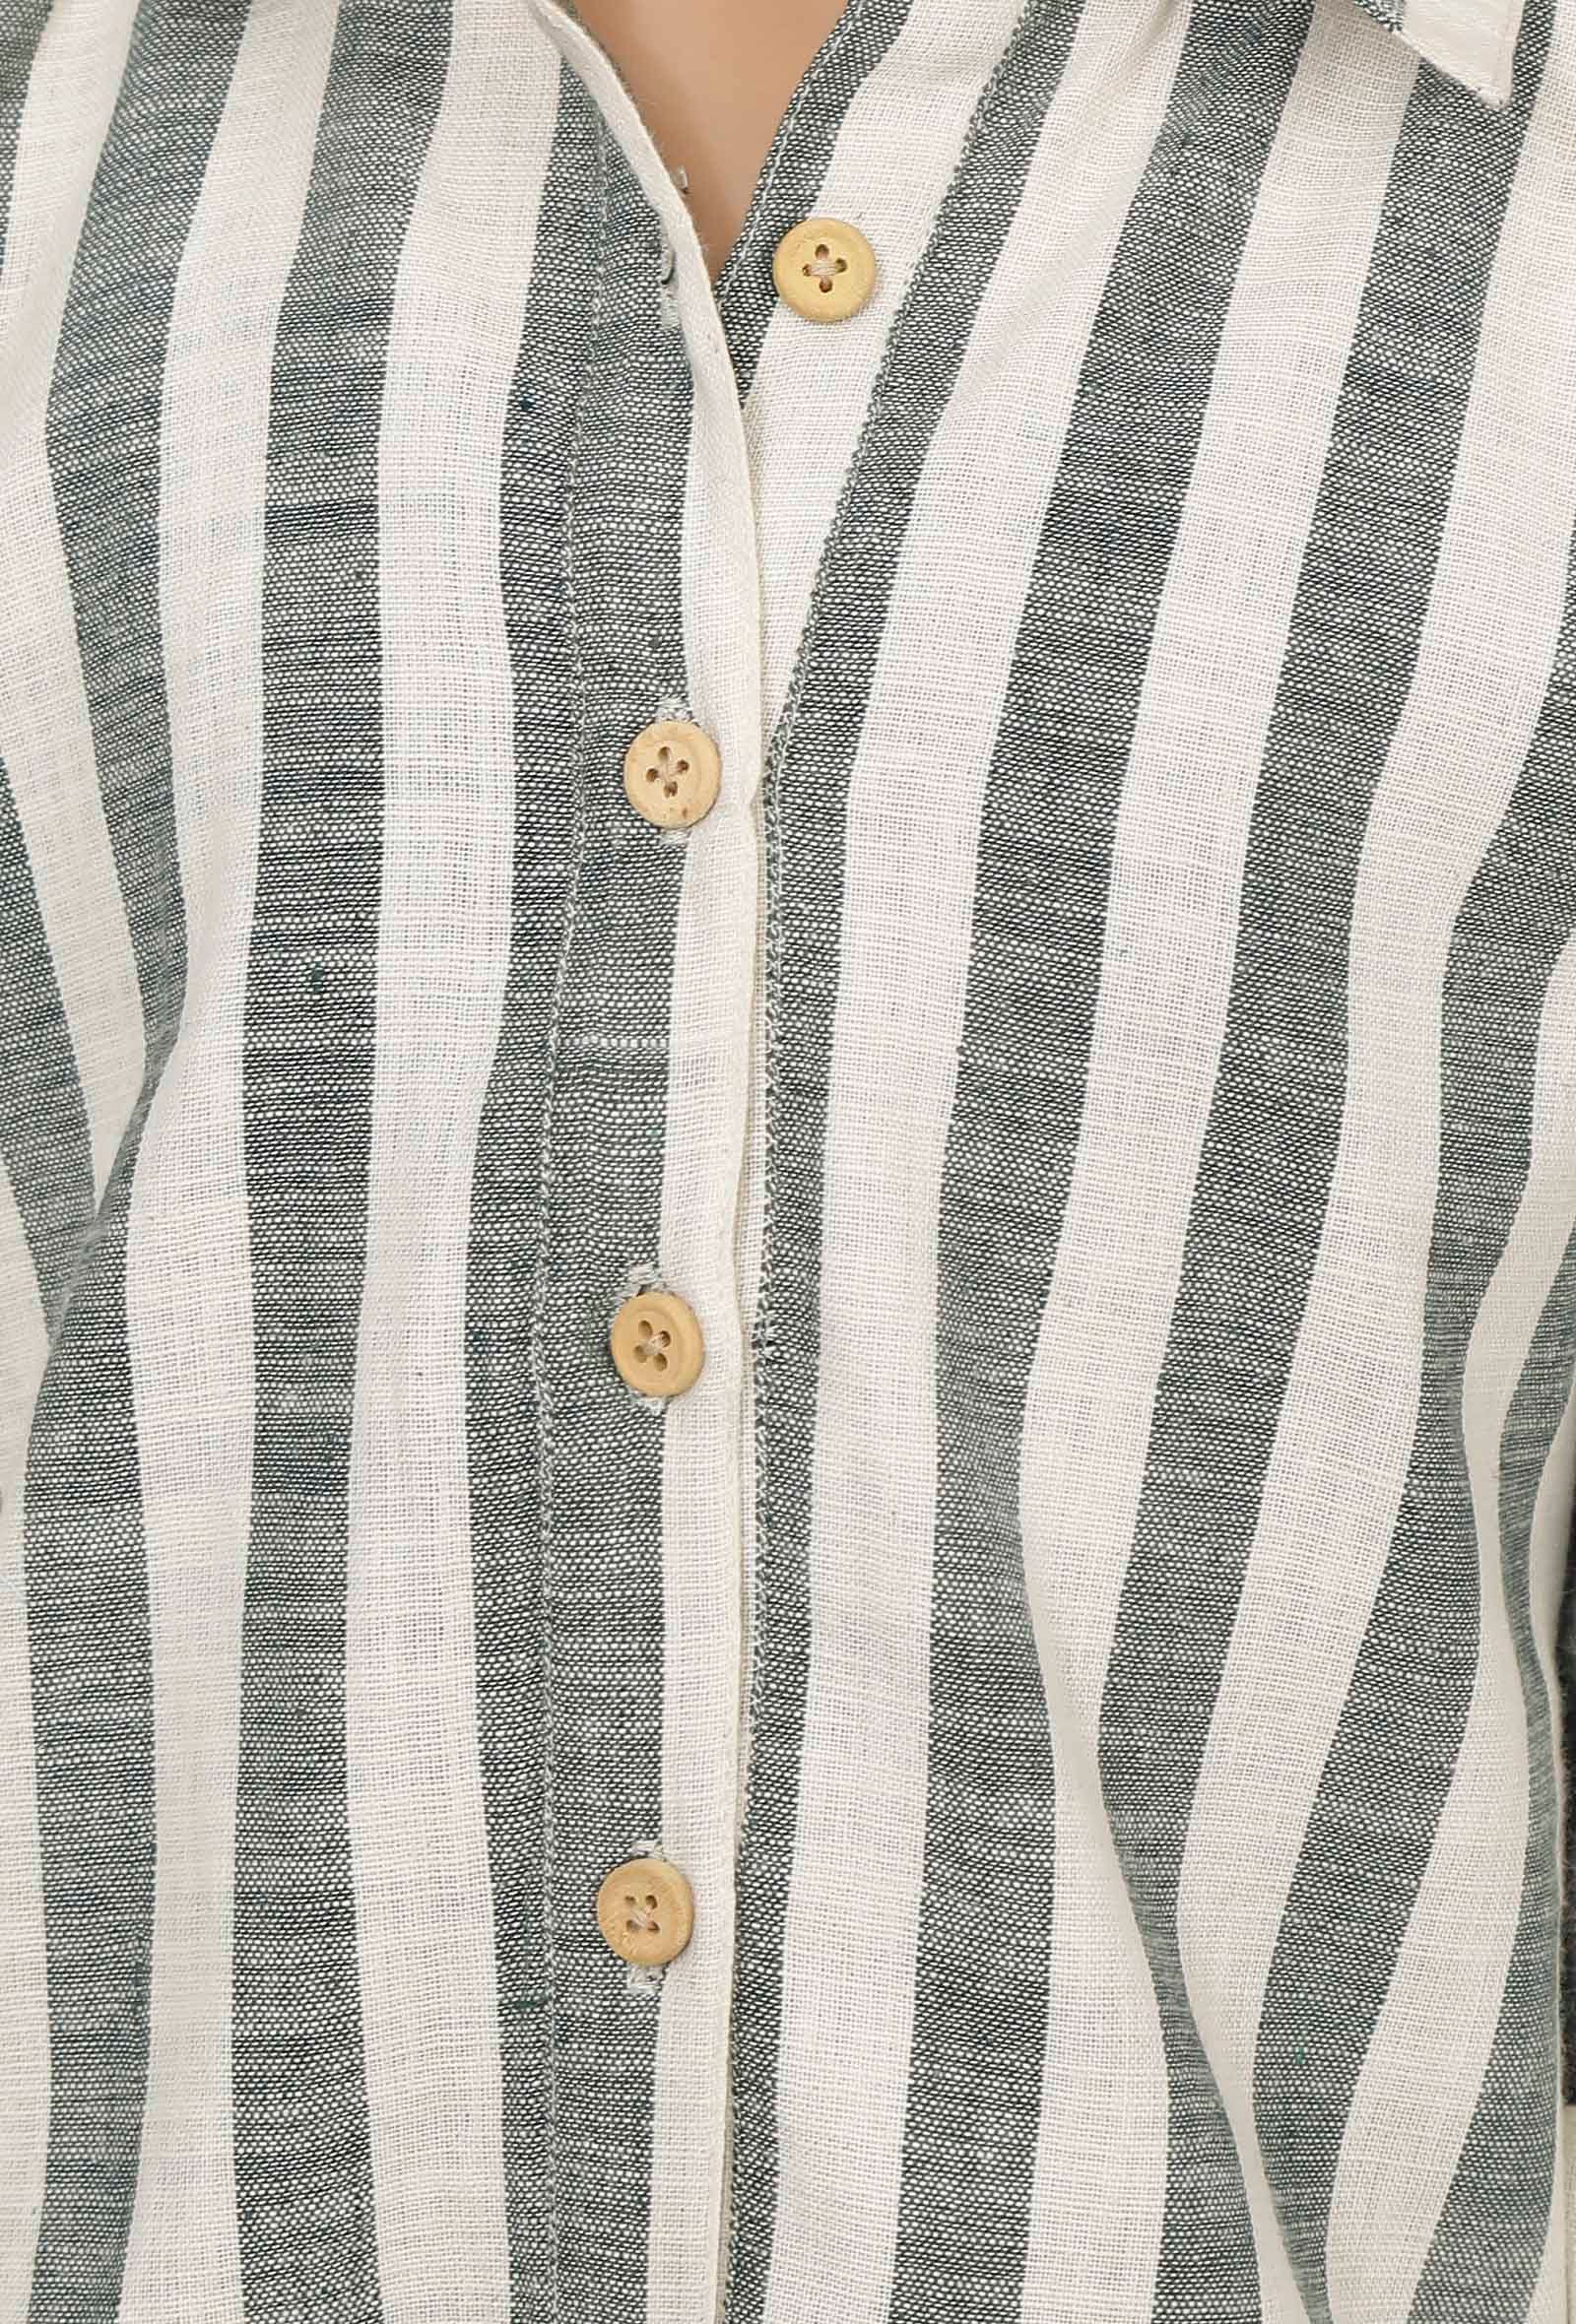 Set of 2: Irish Grey and White Stripes Cotton Belted Kurti with Pants